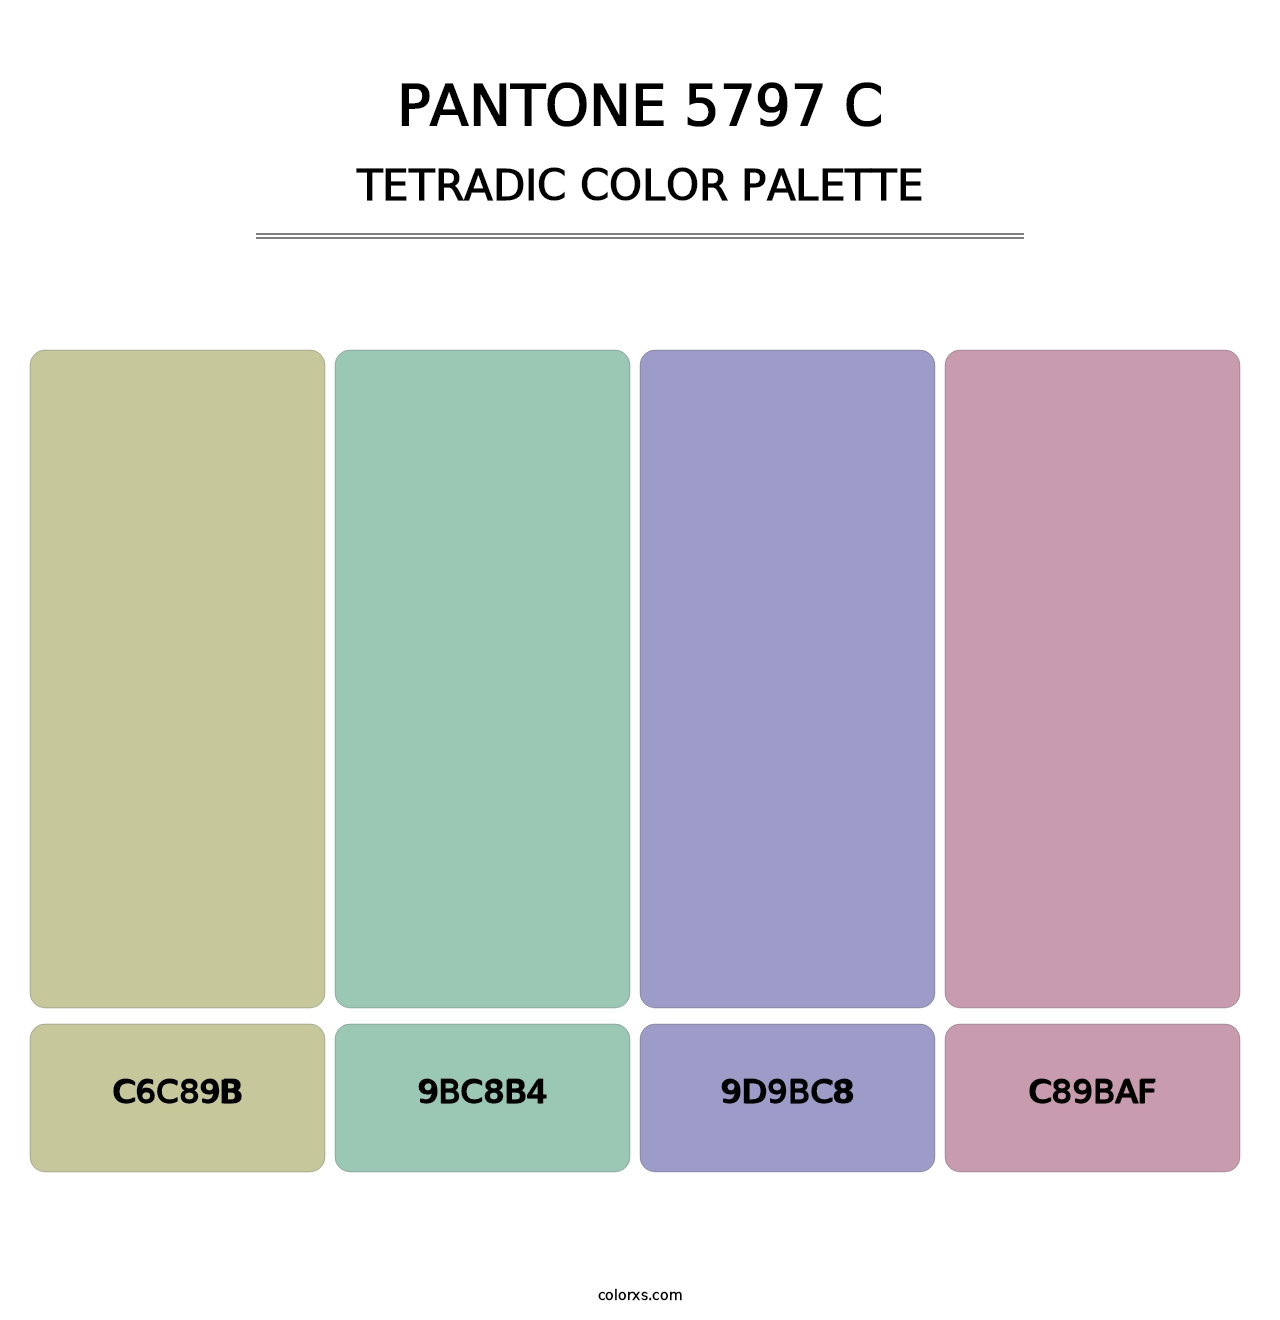 PANTONE 5797 C - Tetradic Color Palette